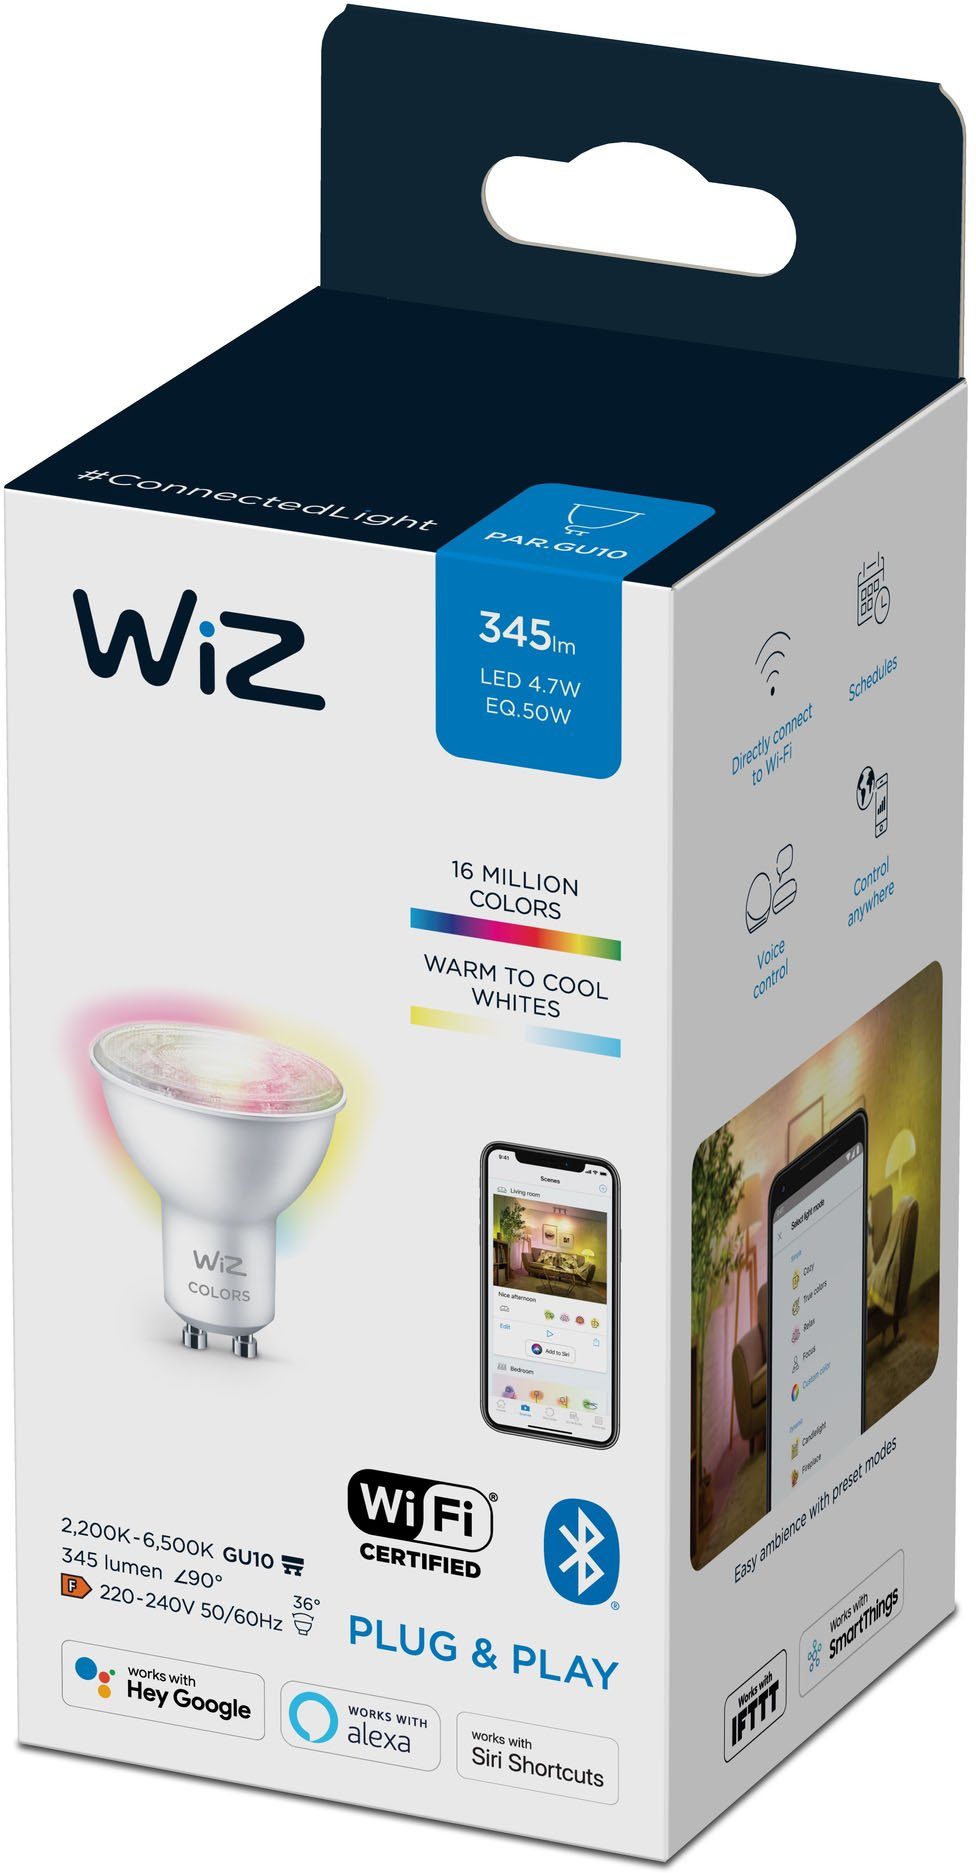 Farbwechsler GU10, Wireless LED-Leuchtmittel 50W Set, Spot Sensor GU10 White&Color + WiZ